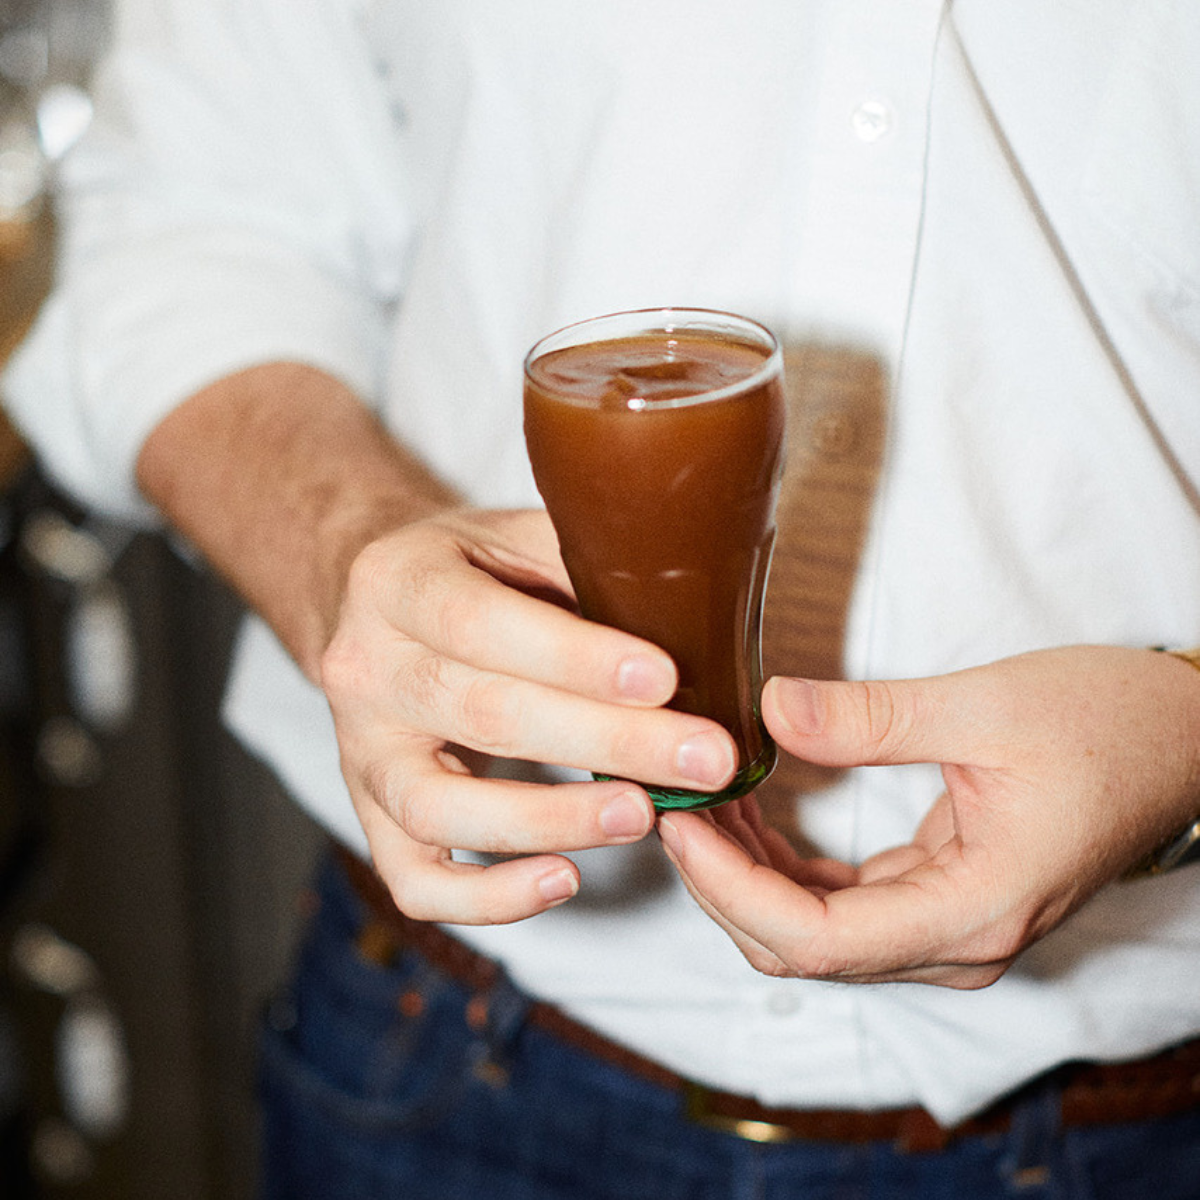 Ron Con Cola, a brown colored cocktail